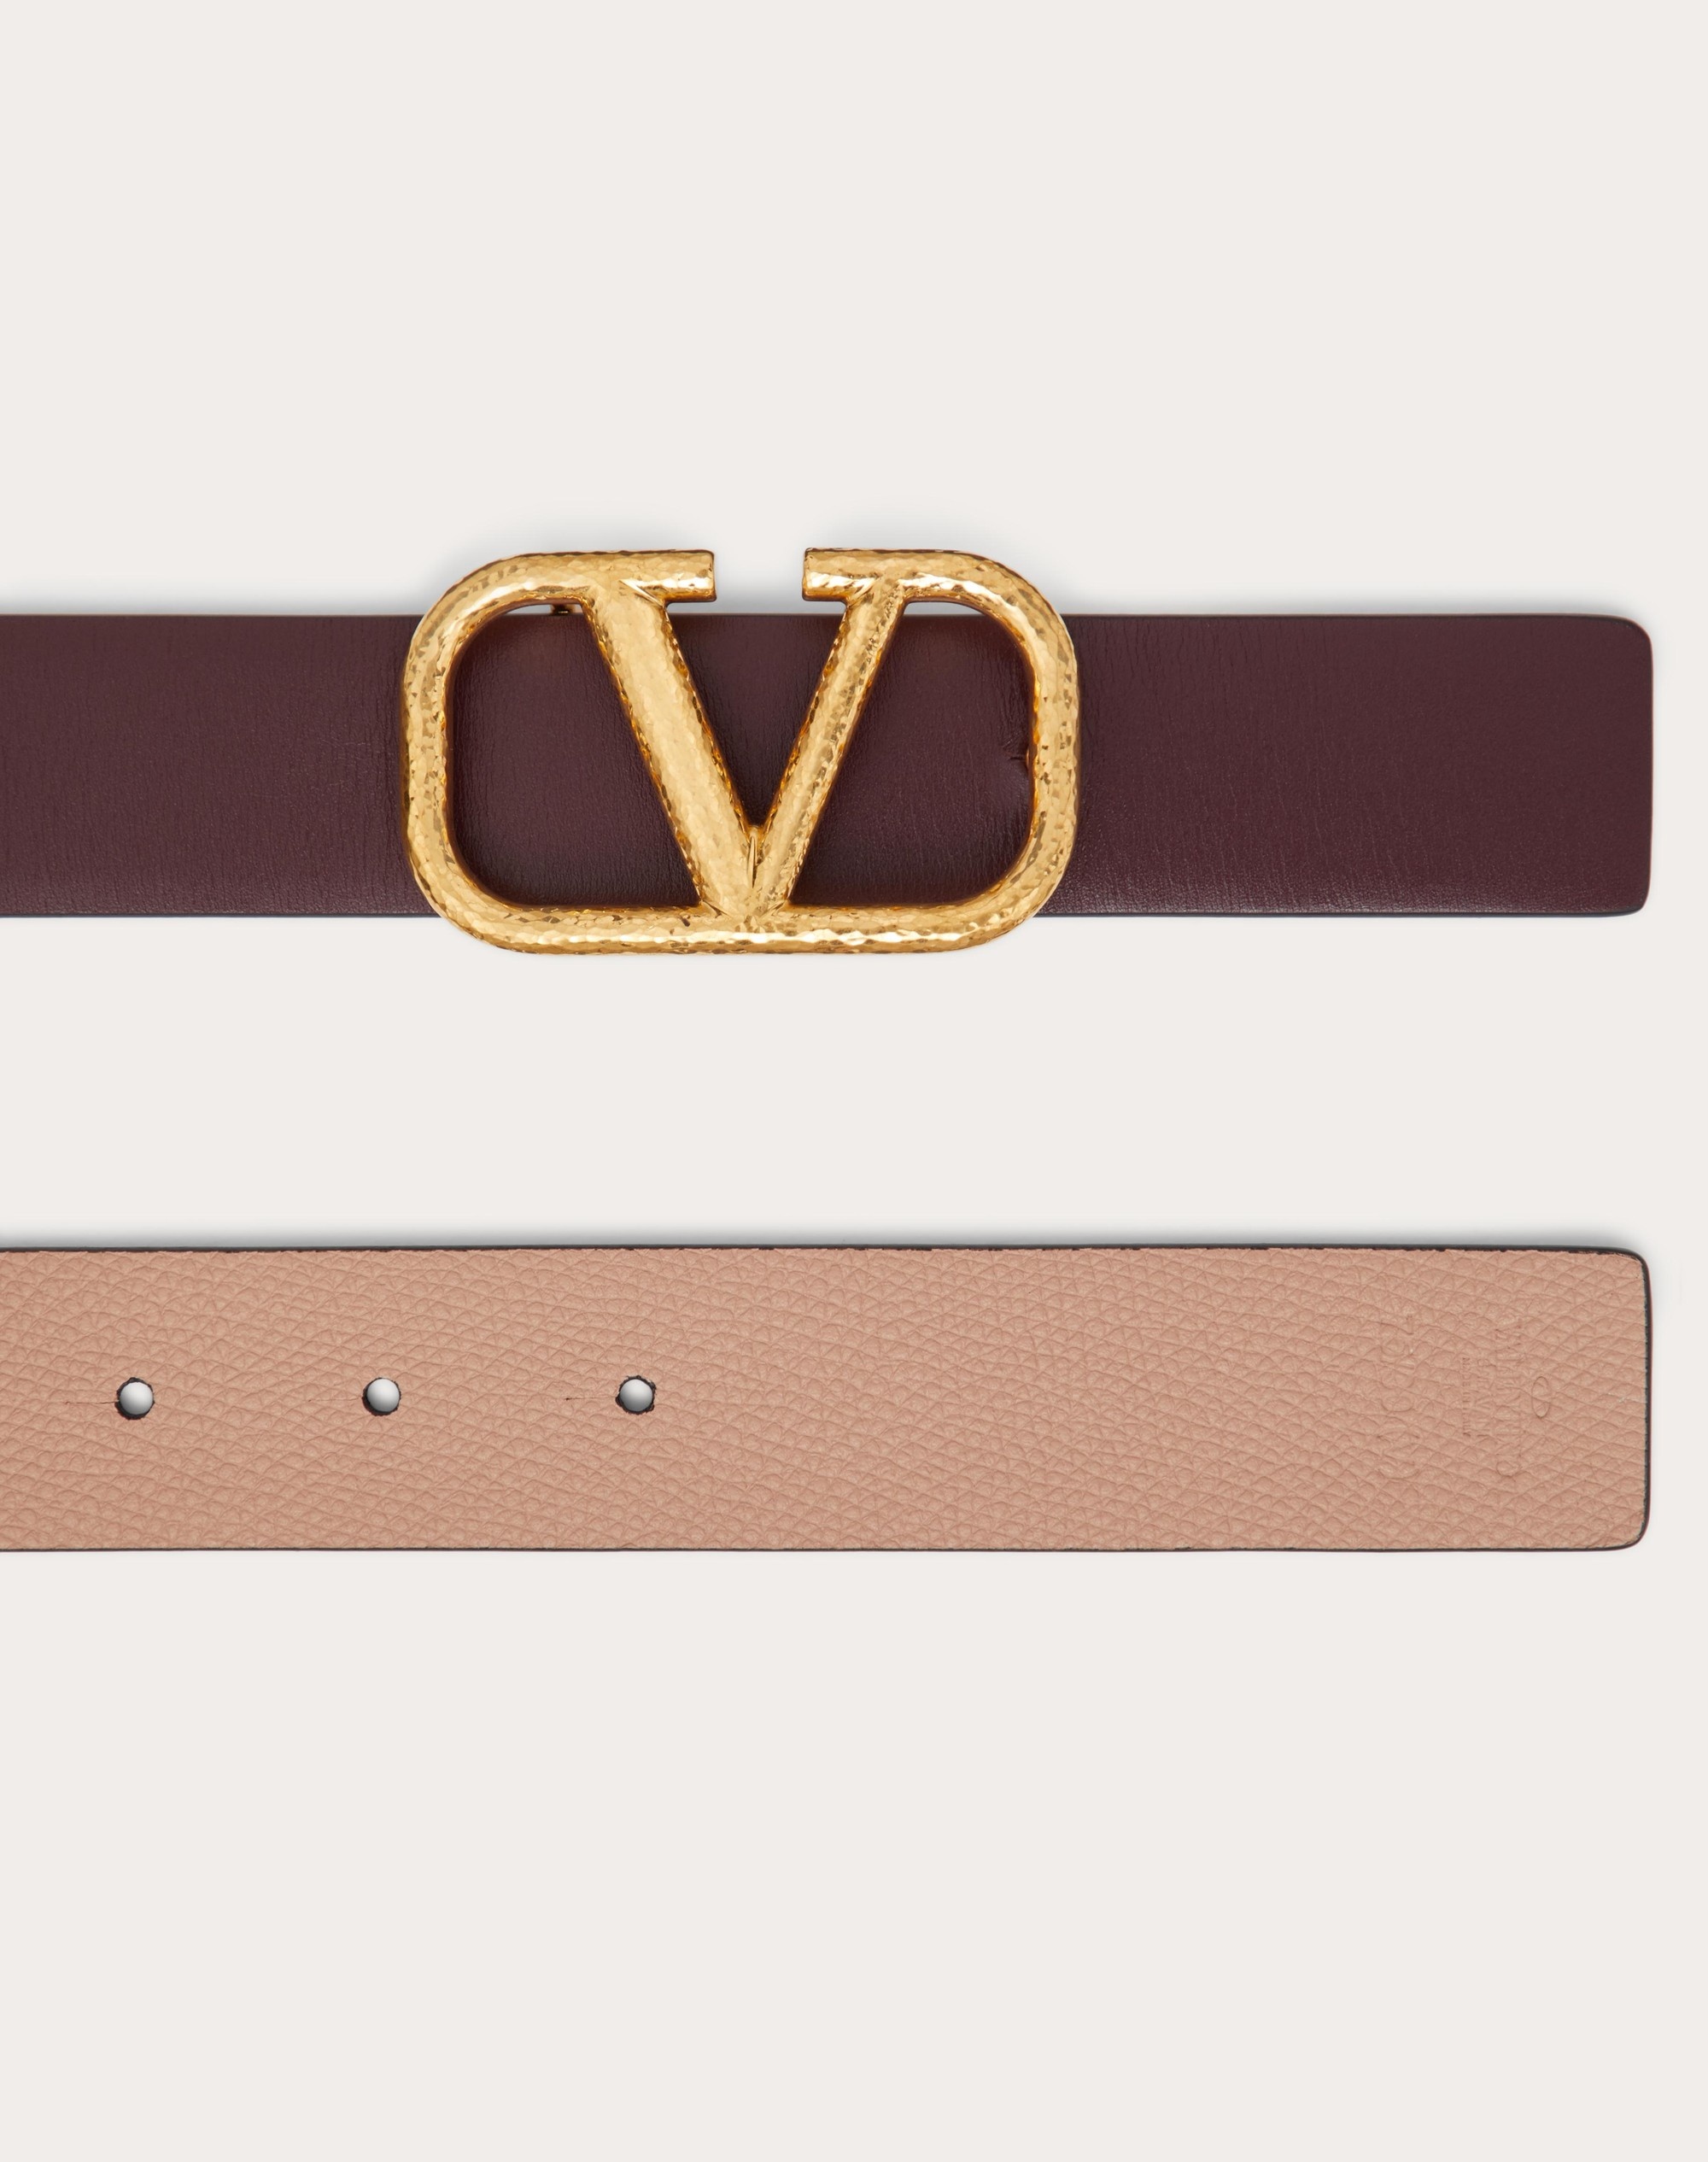 VLogo reversible leather belt